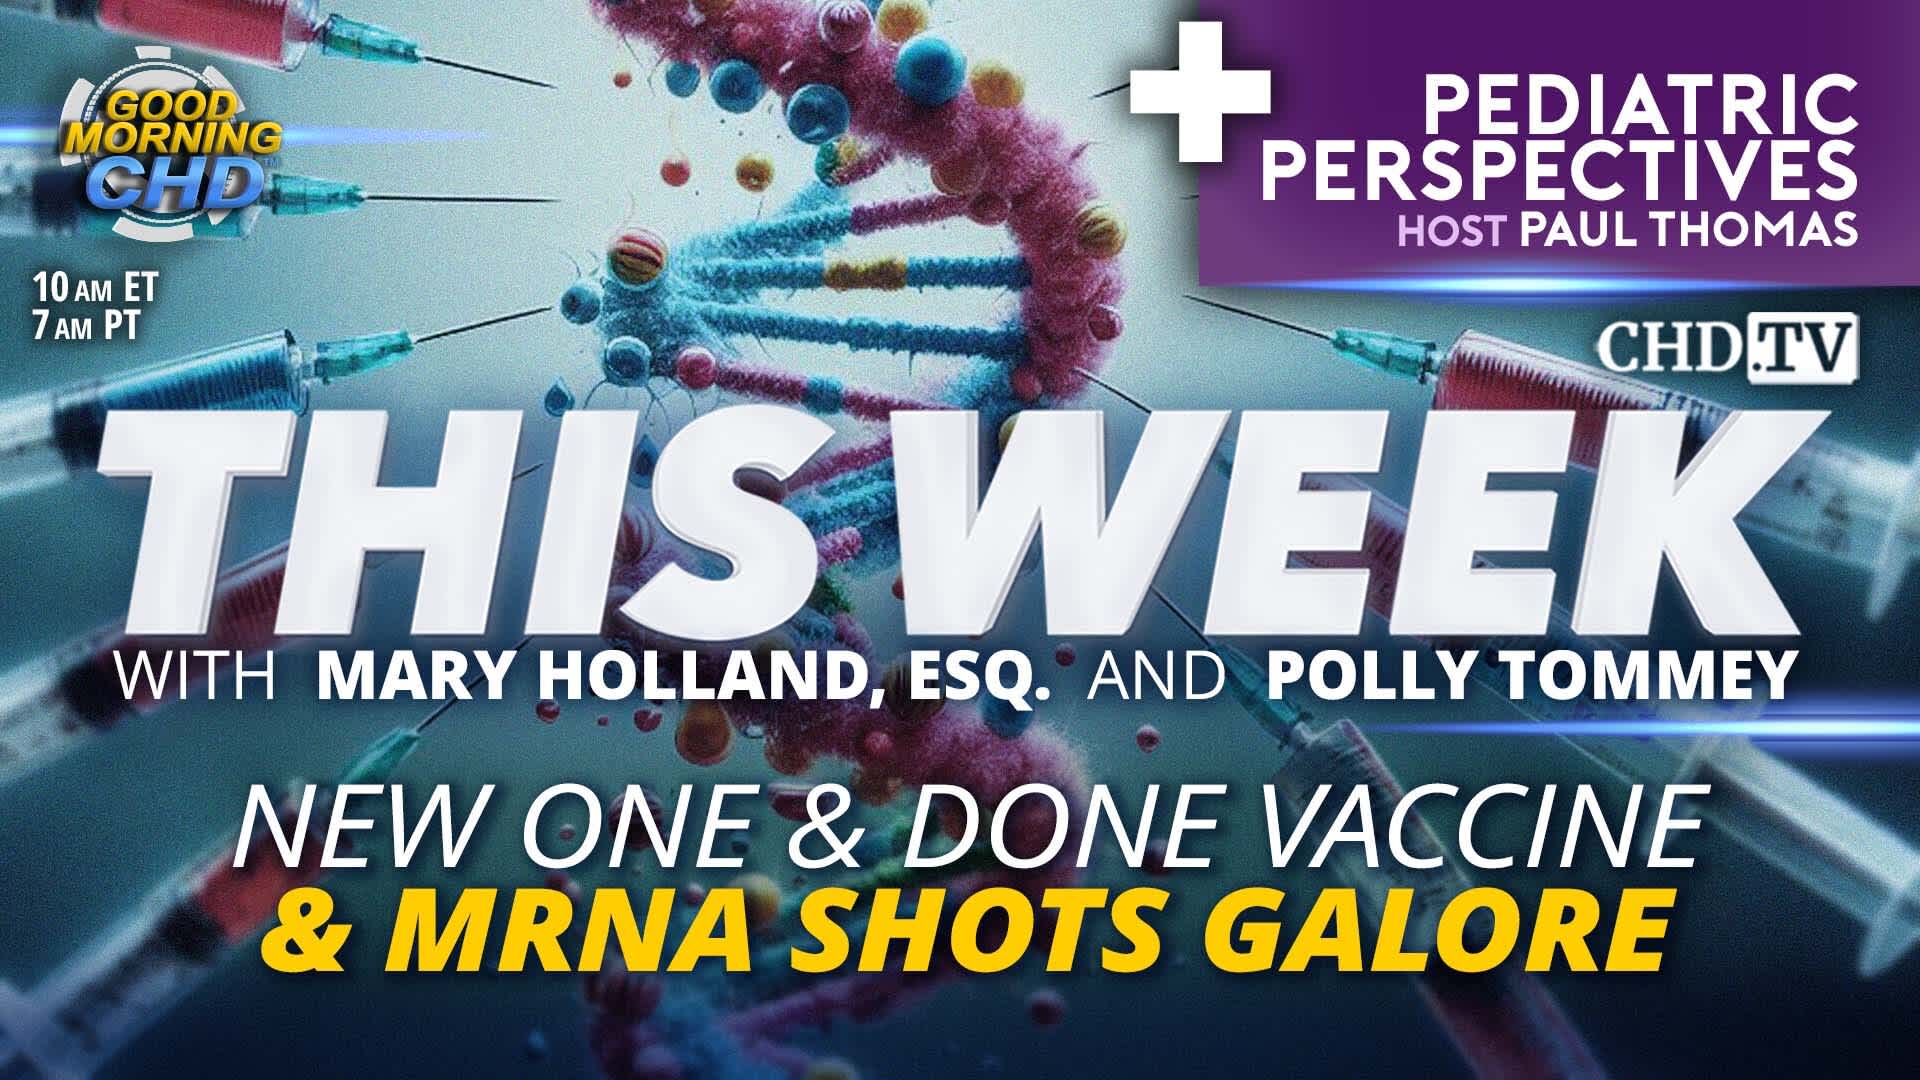 New One & Done Vaccine & mRNA Shots Galore